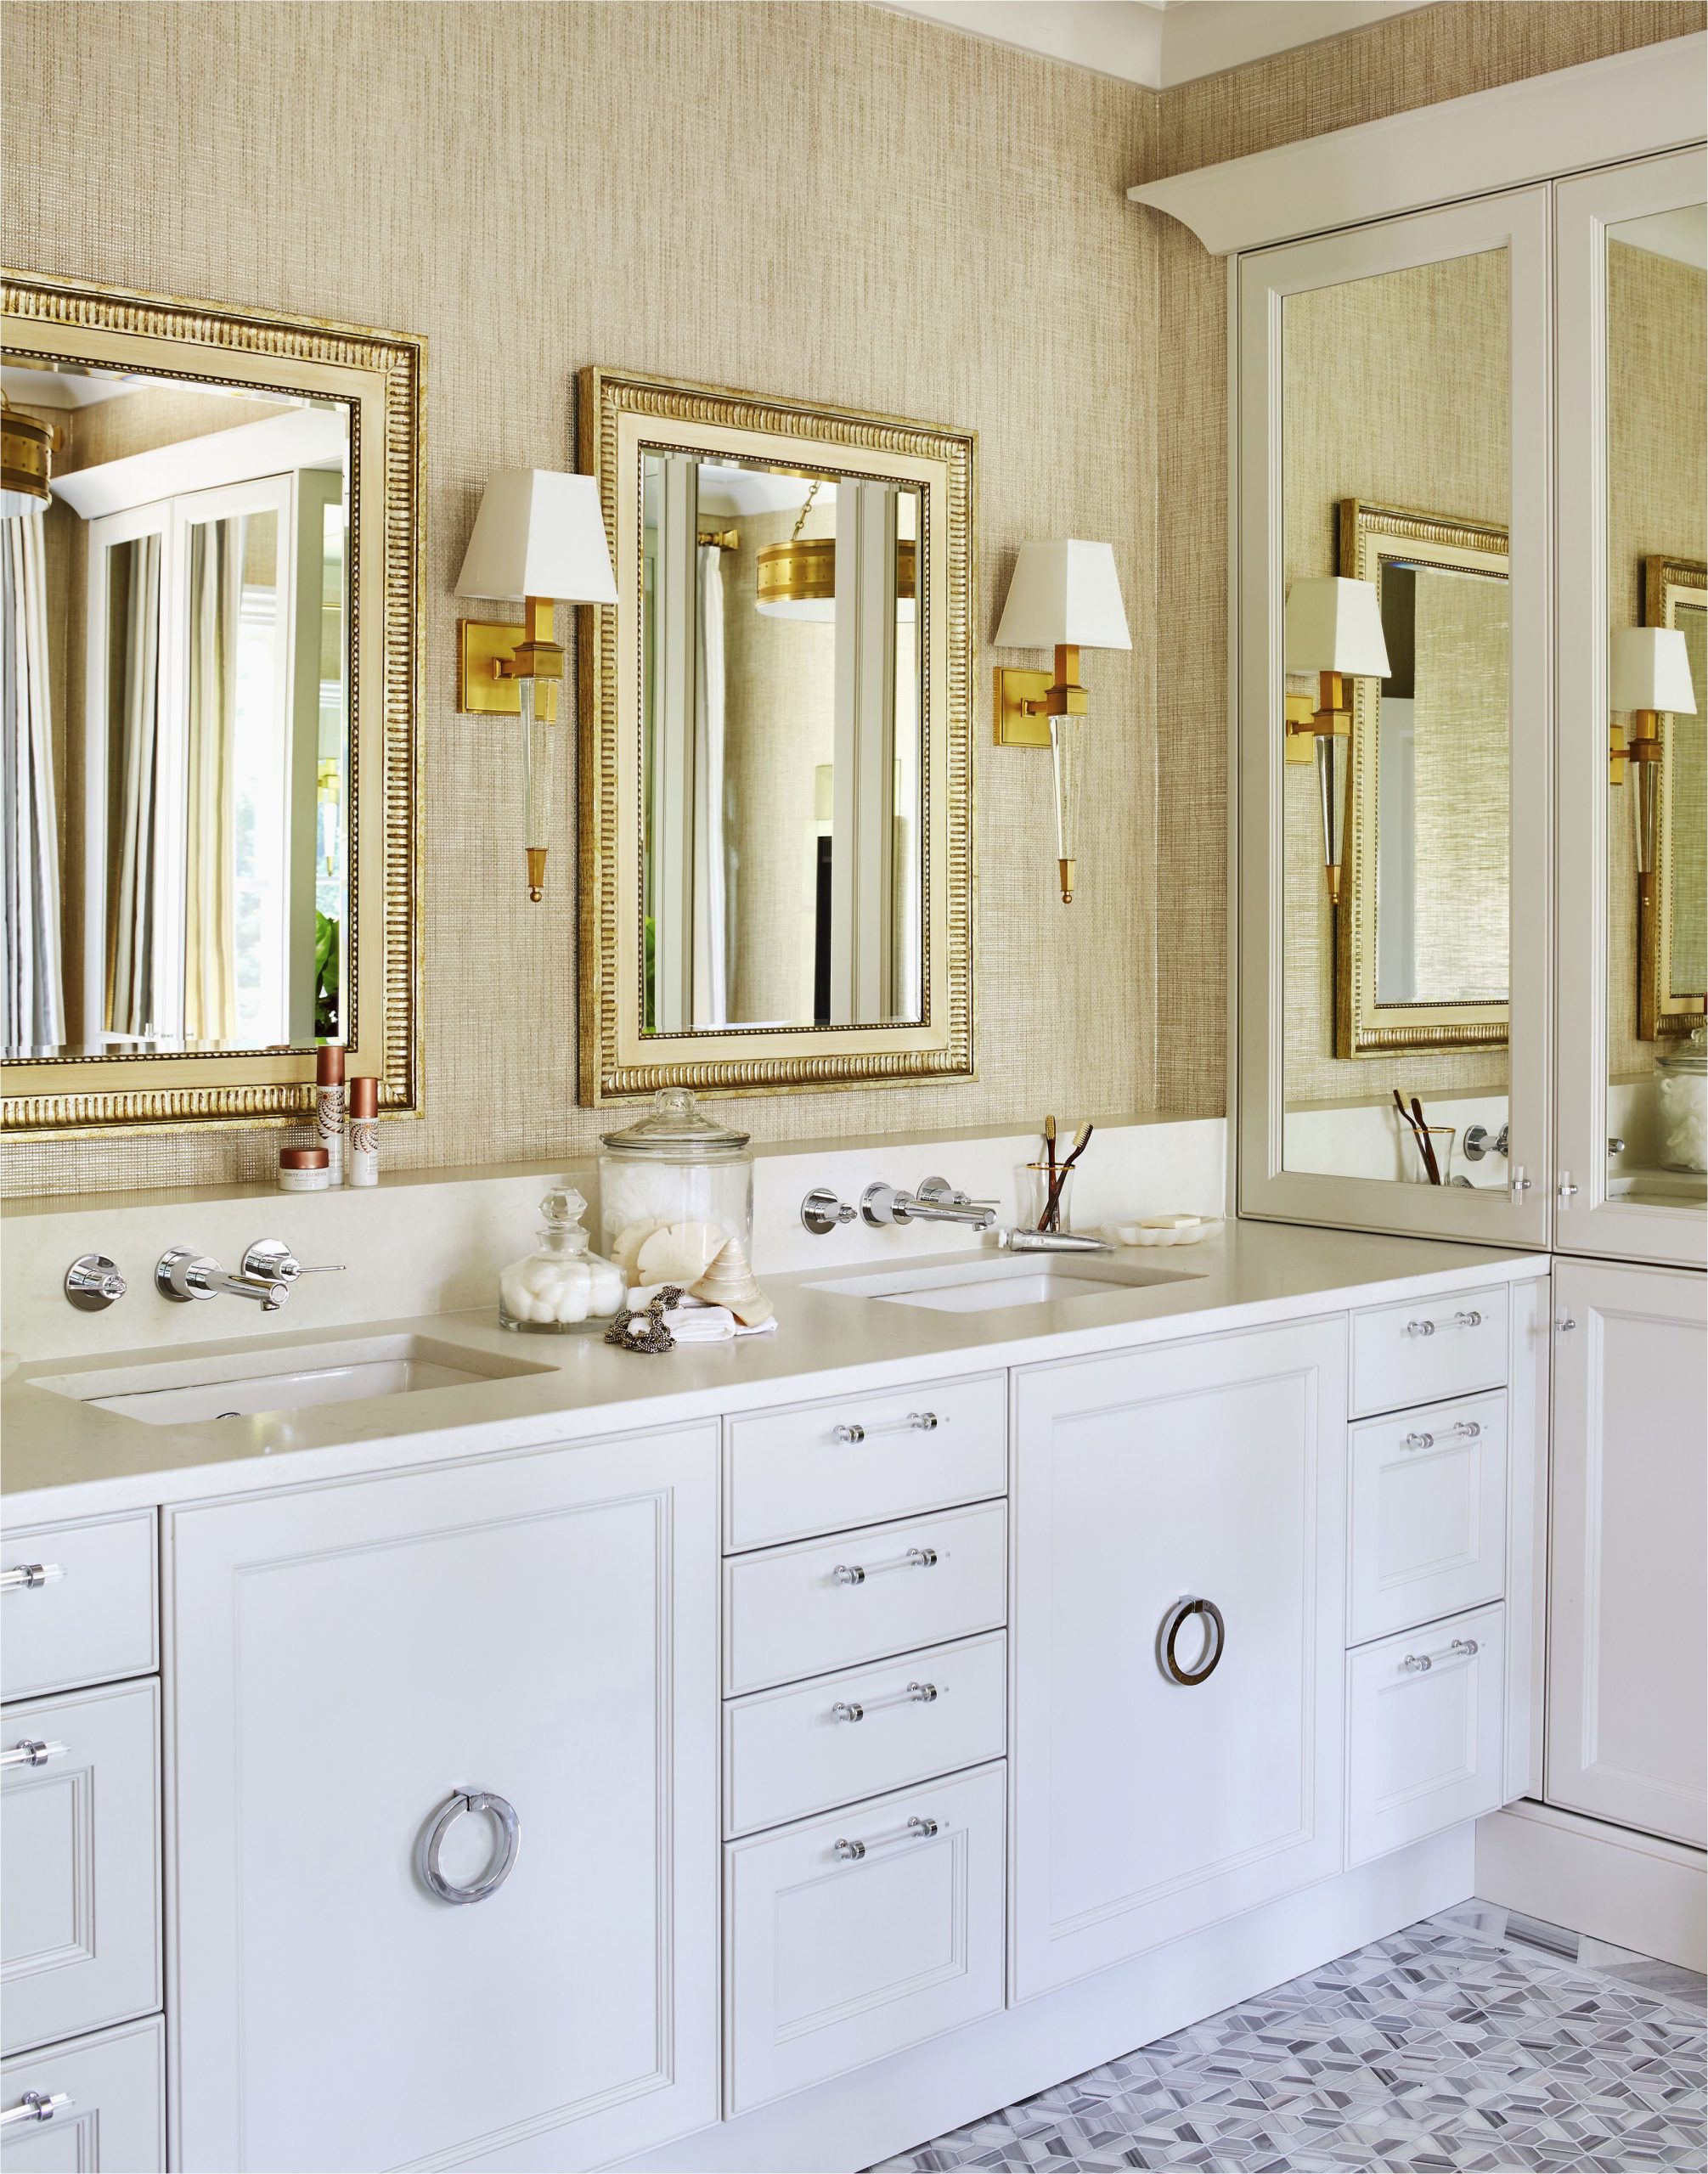 Gold and White Bathroom Rugs 50 Bathroom Decorating Ideas Of Bathroom Decor